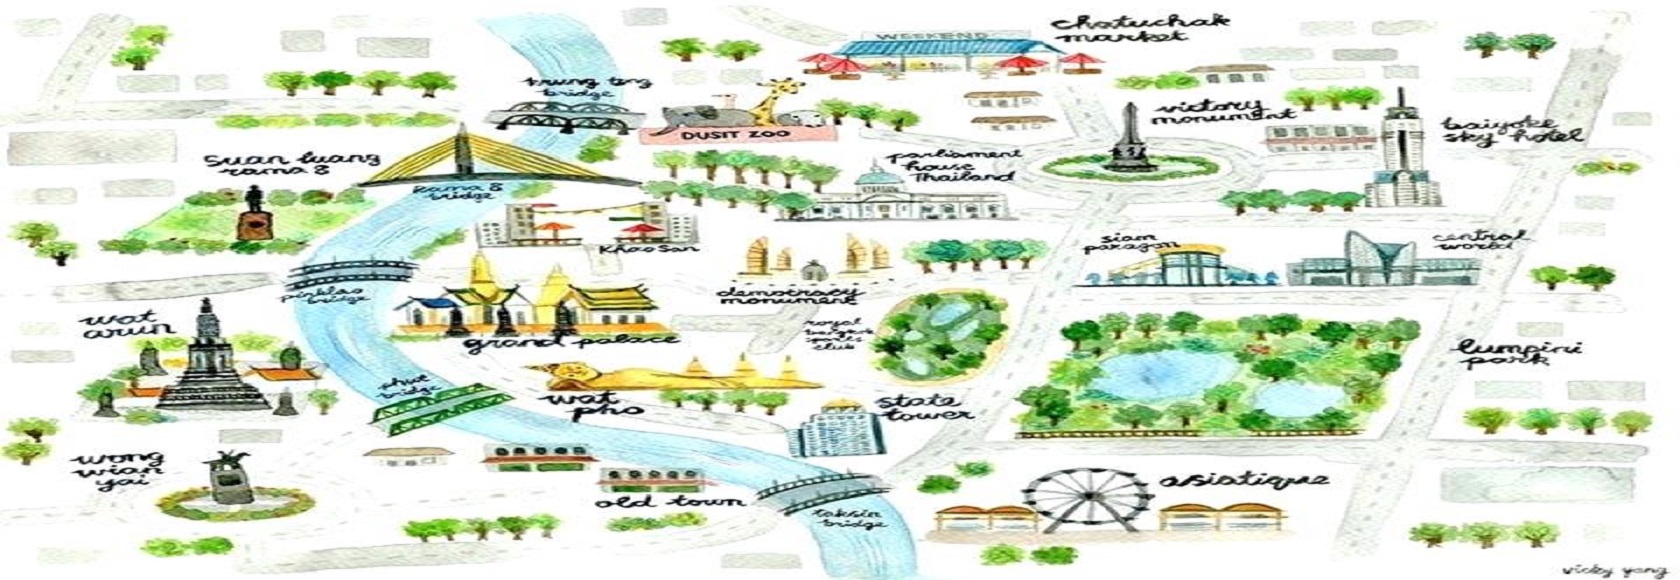 bangok city tourist map